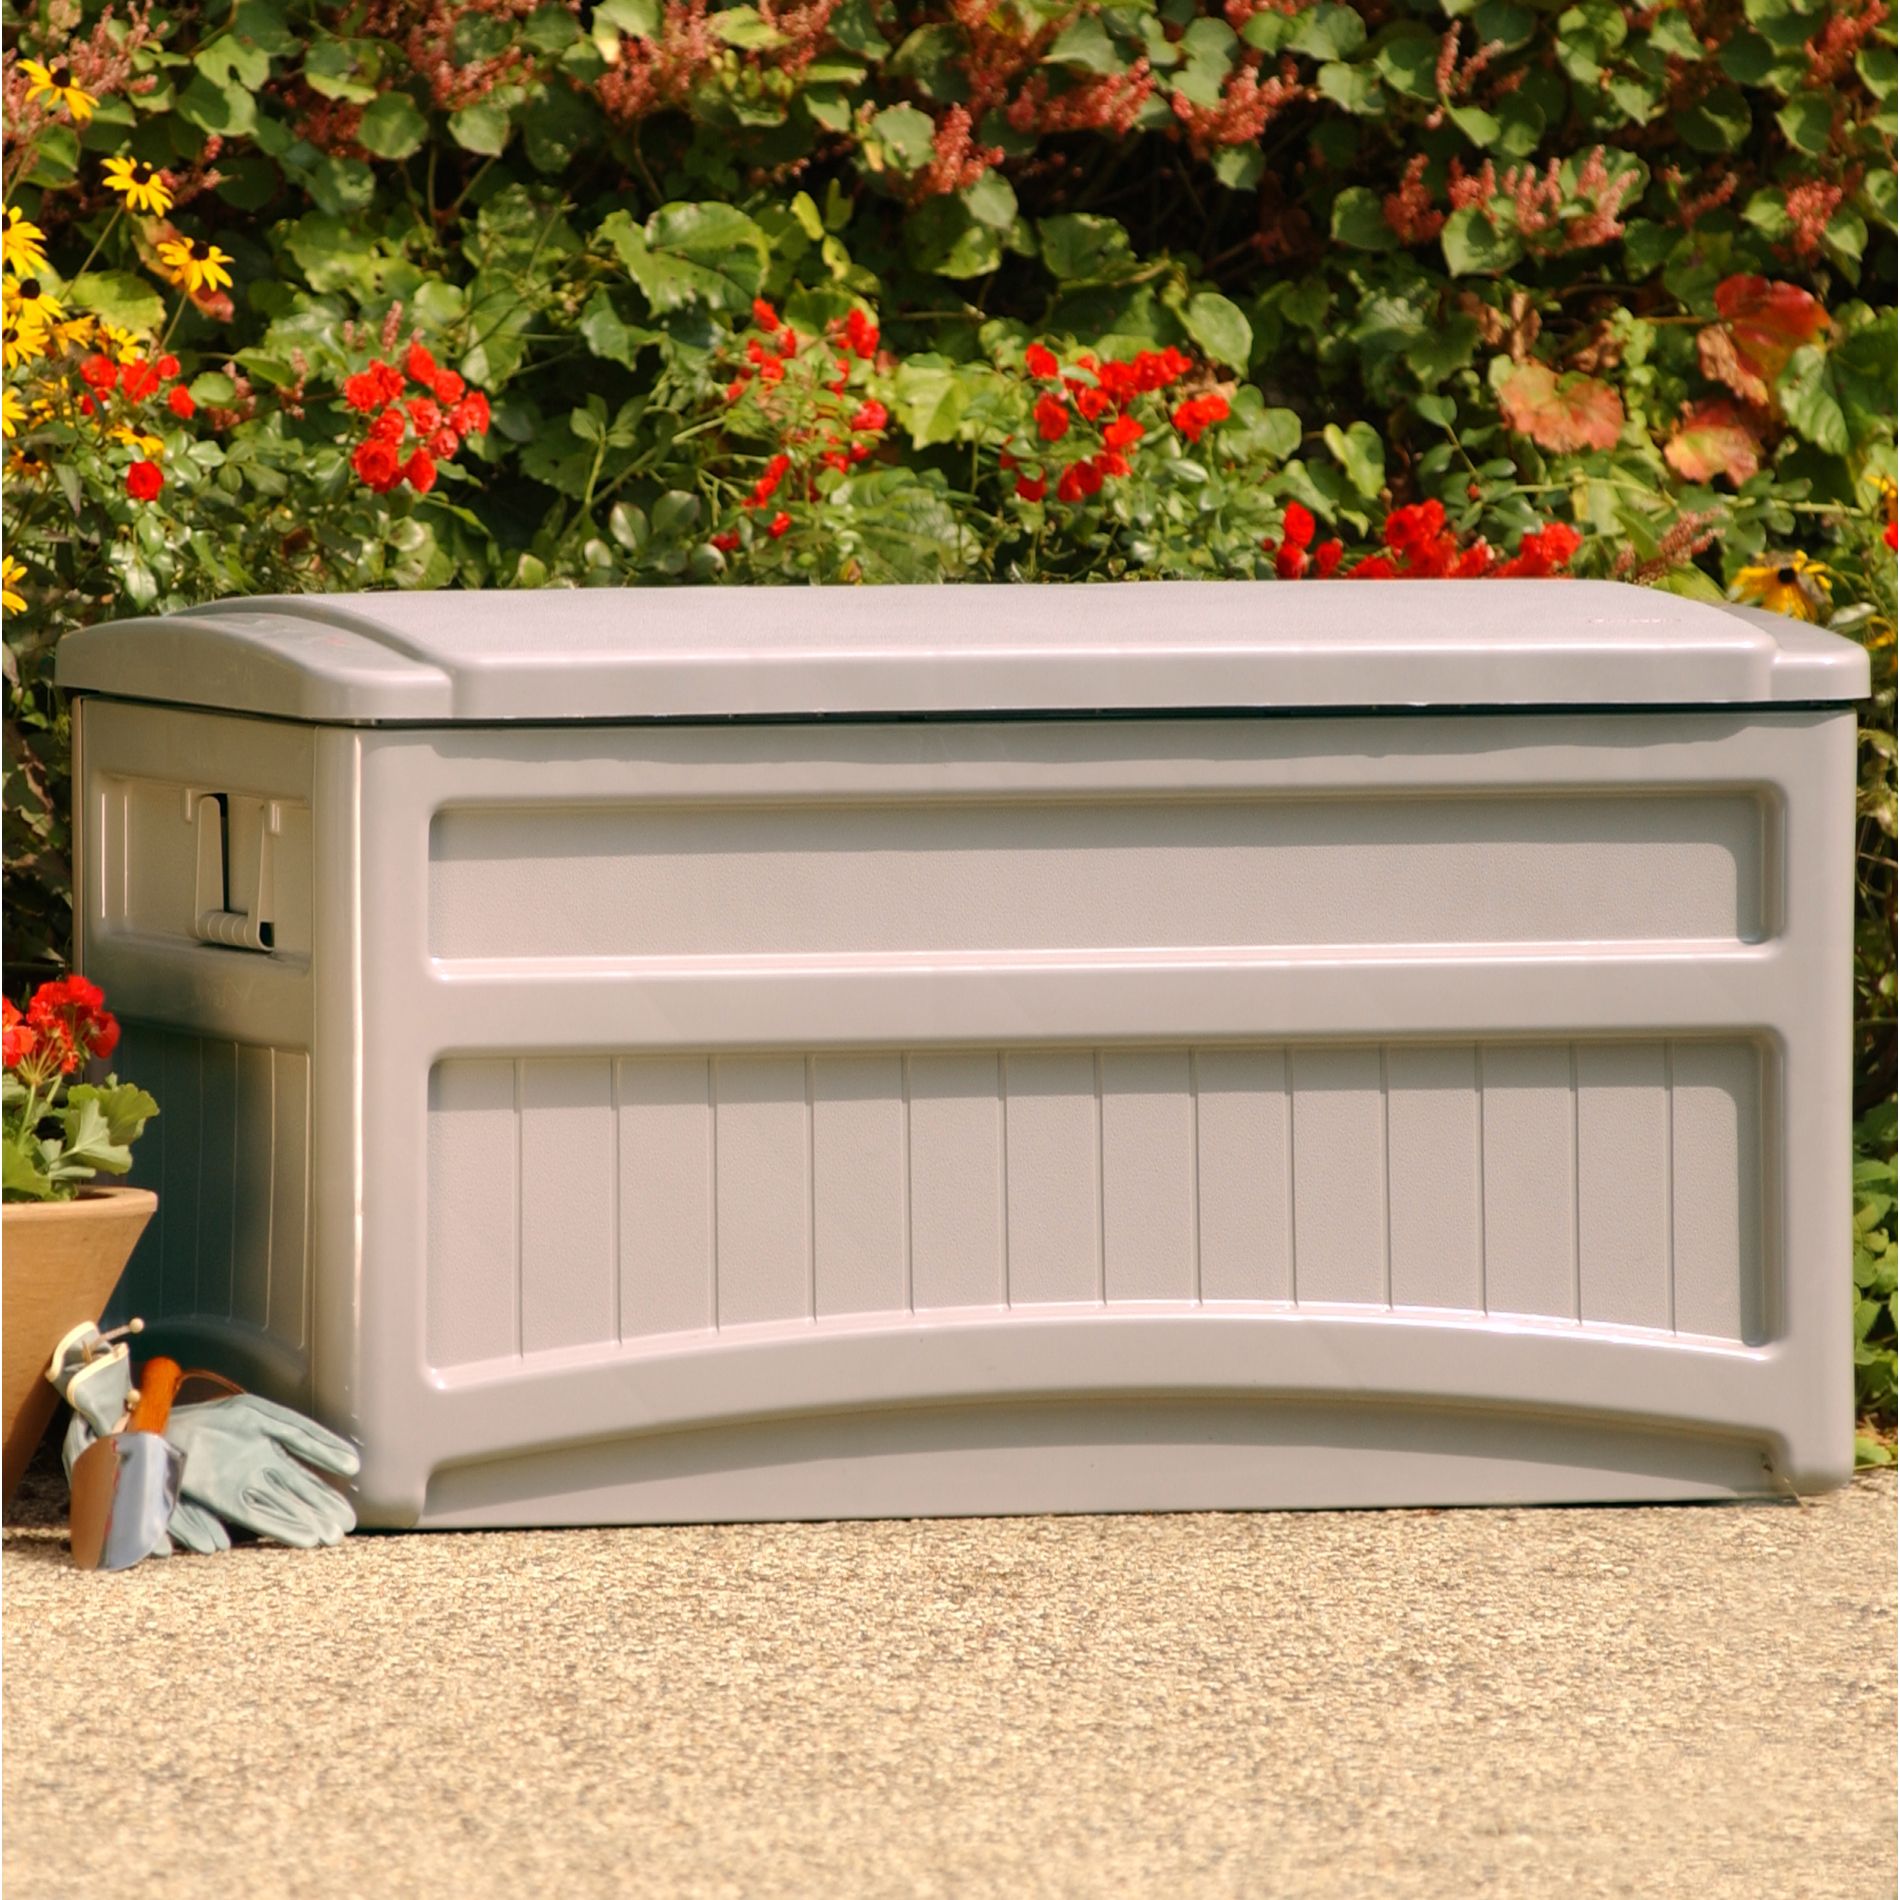 Suncast Outdoor Storage Box w/Wheels